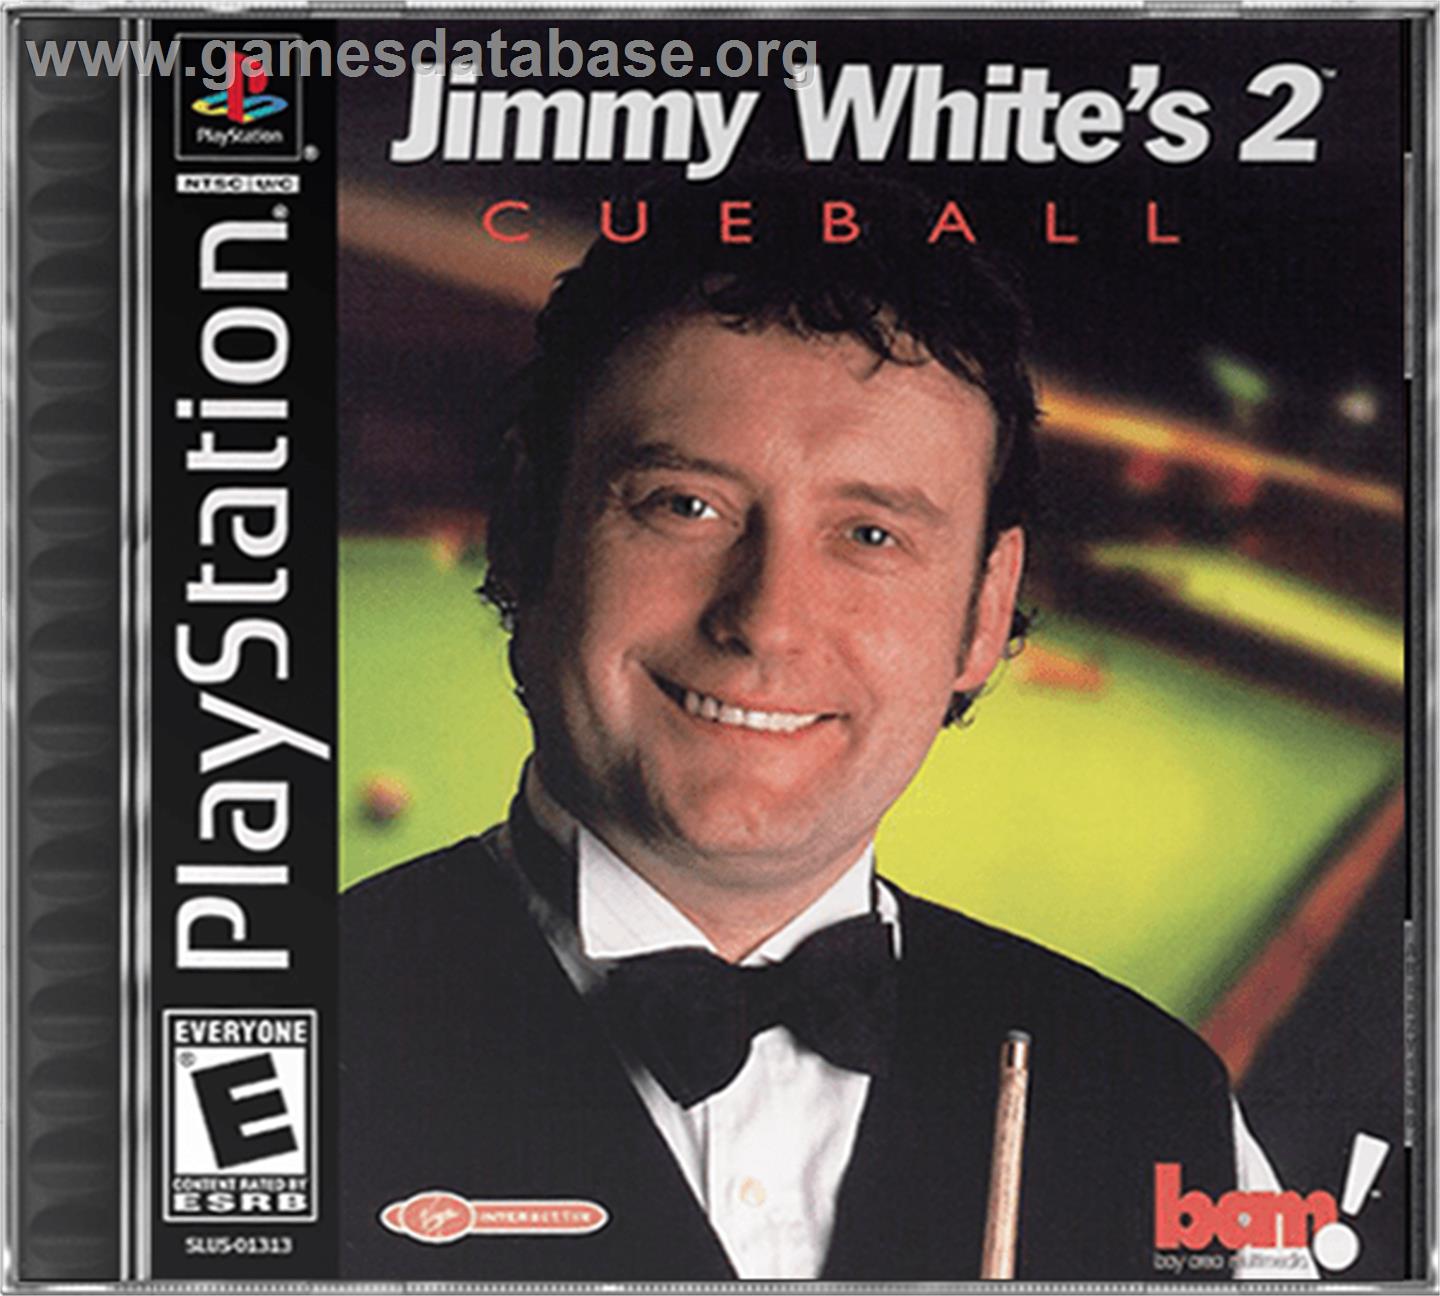 Jimmy White's 2: Cueball - Sony Playstation - Artwork - Box